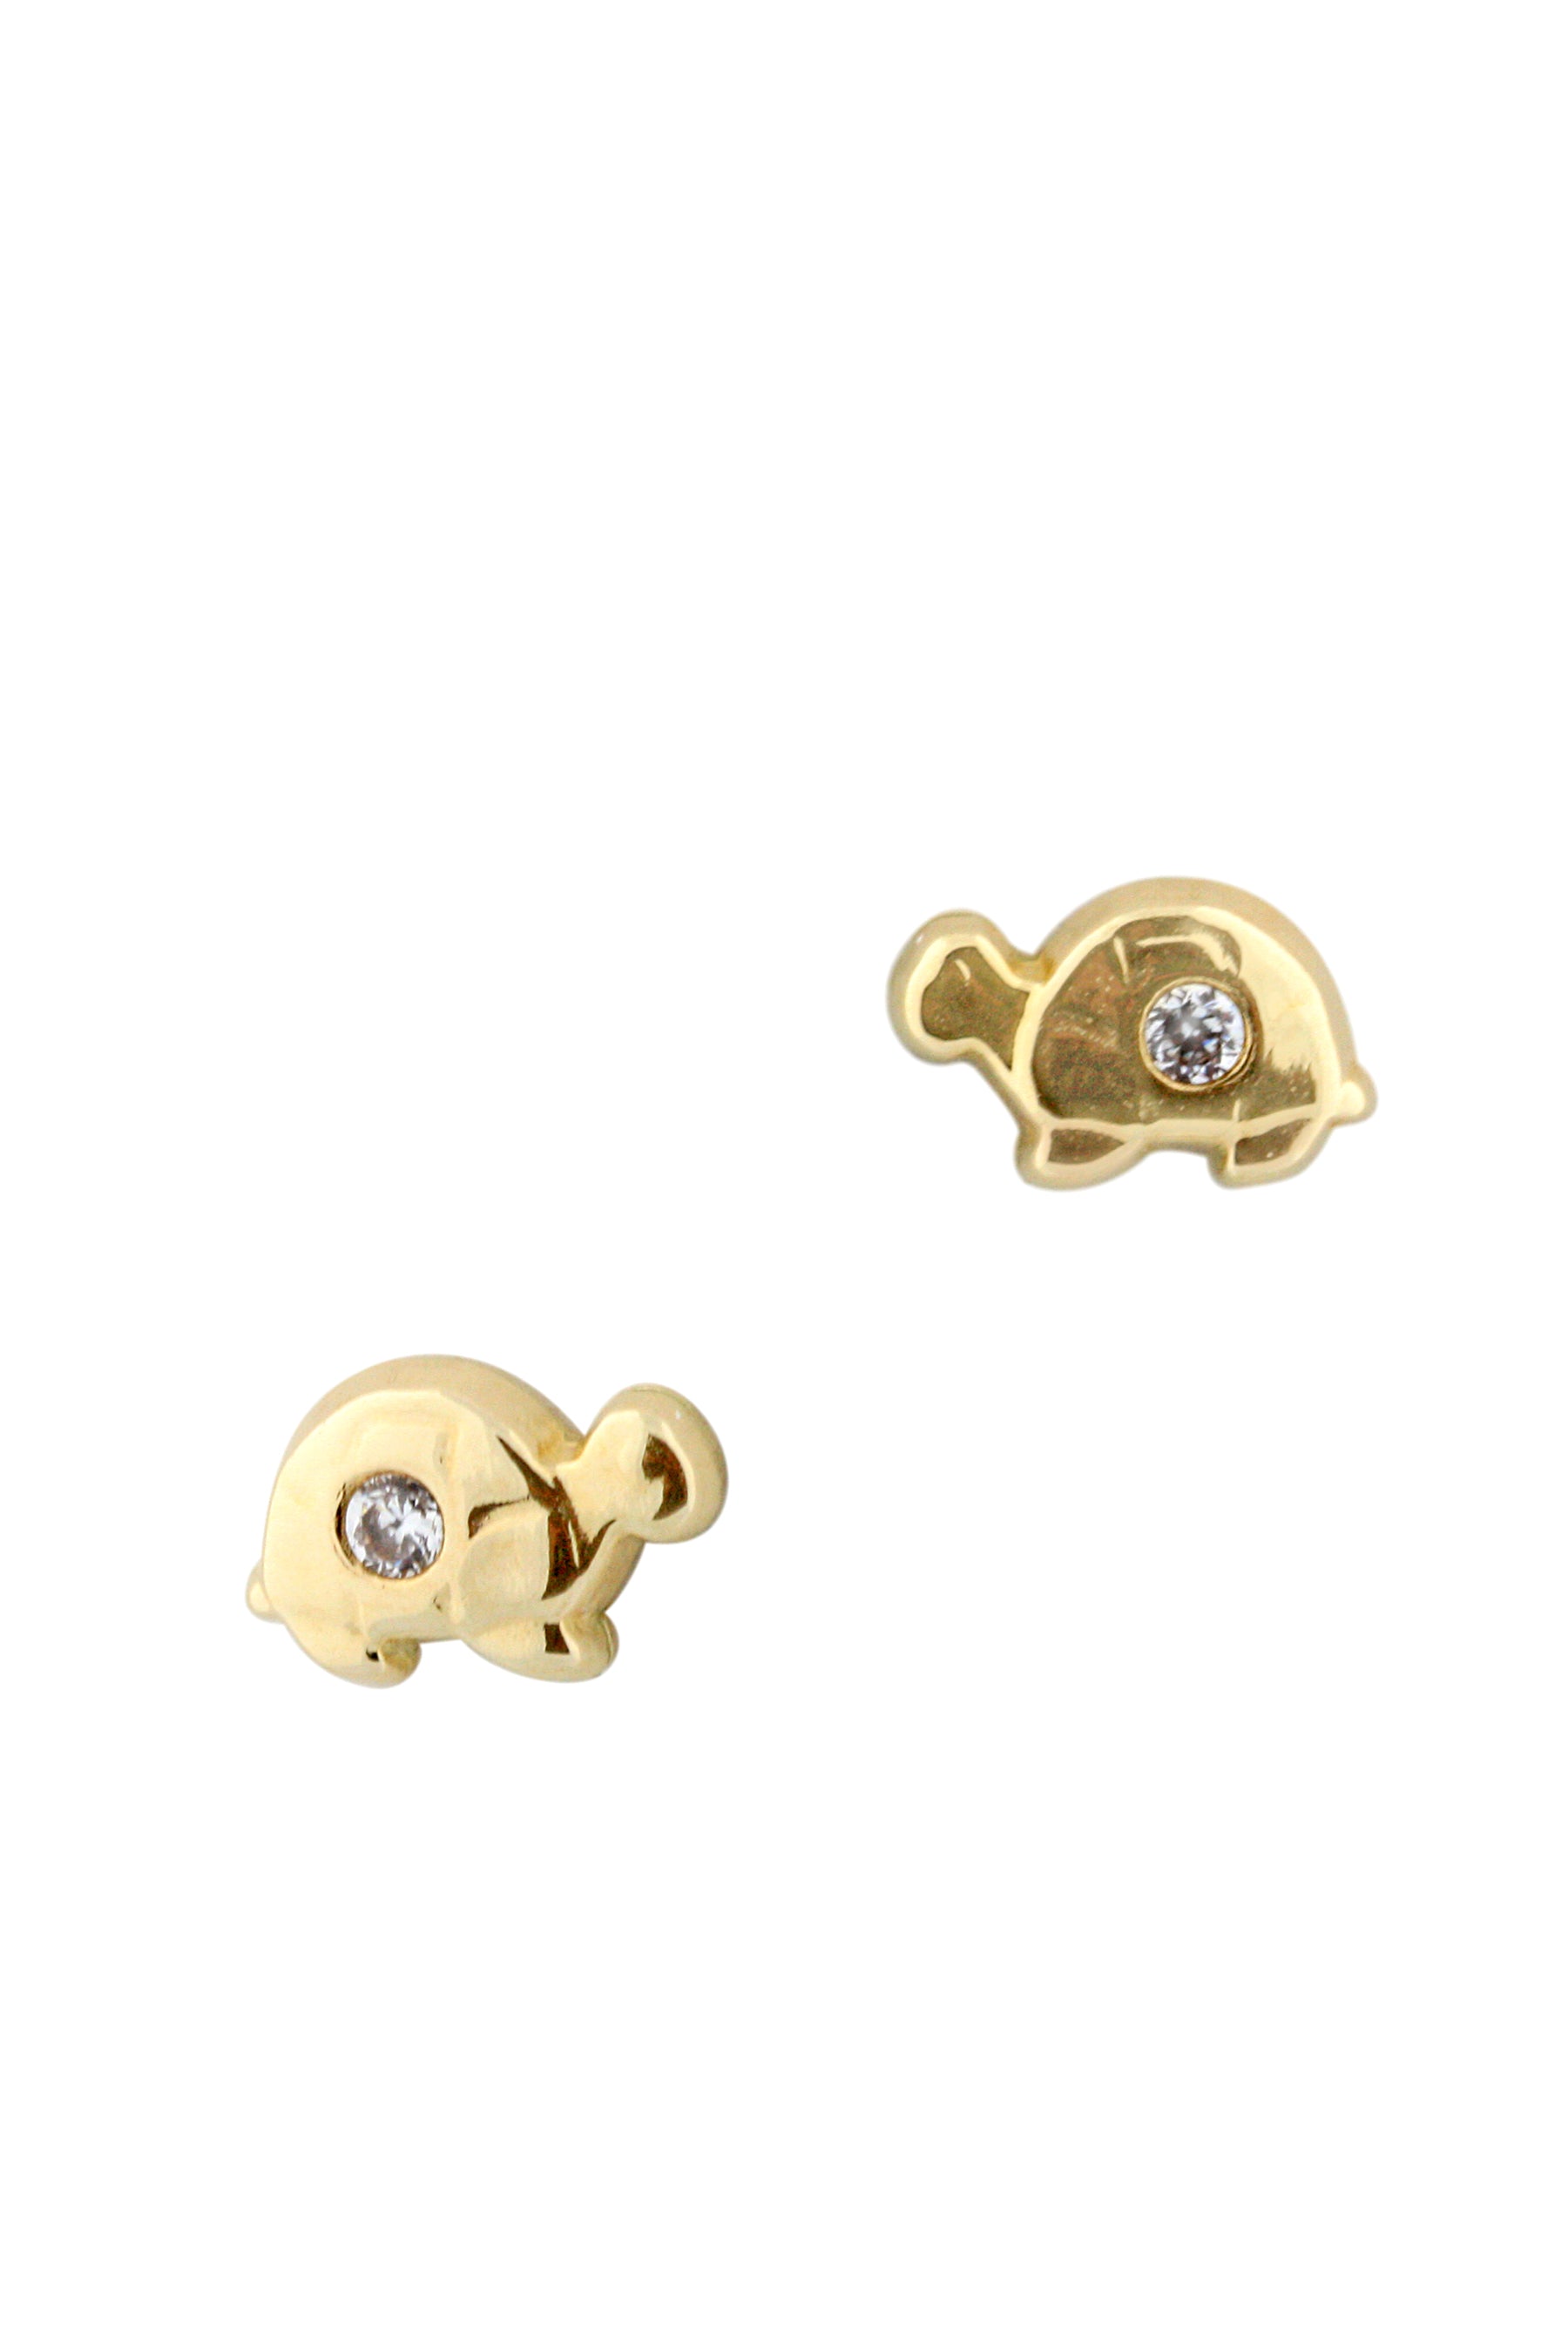 Massete Childrens 14K Gold Screwback Earrings Stud Turtle - Massete